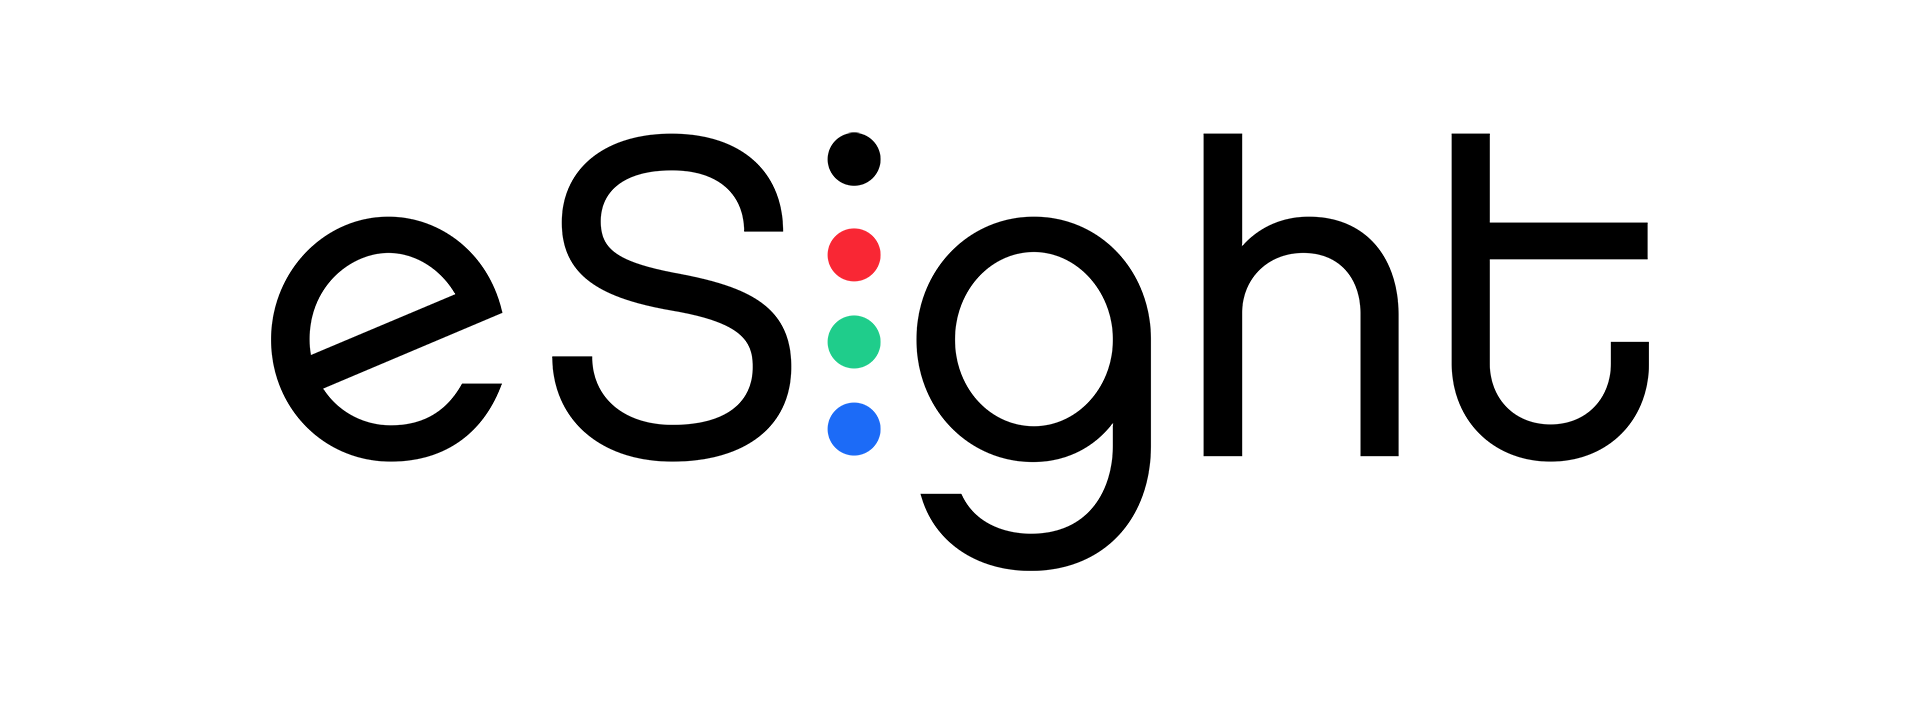 eSight logo 2018.png